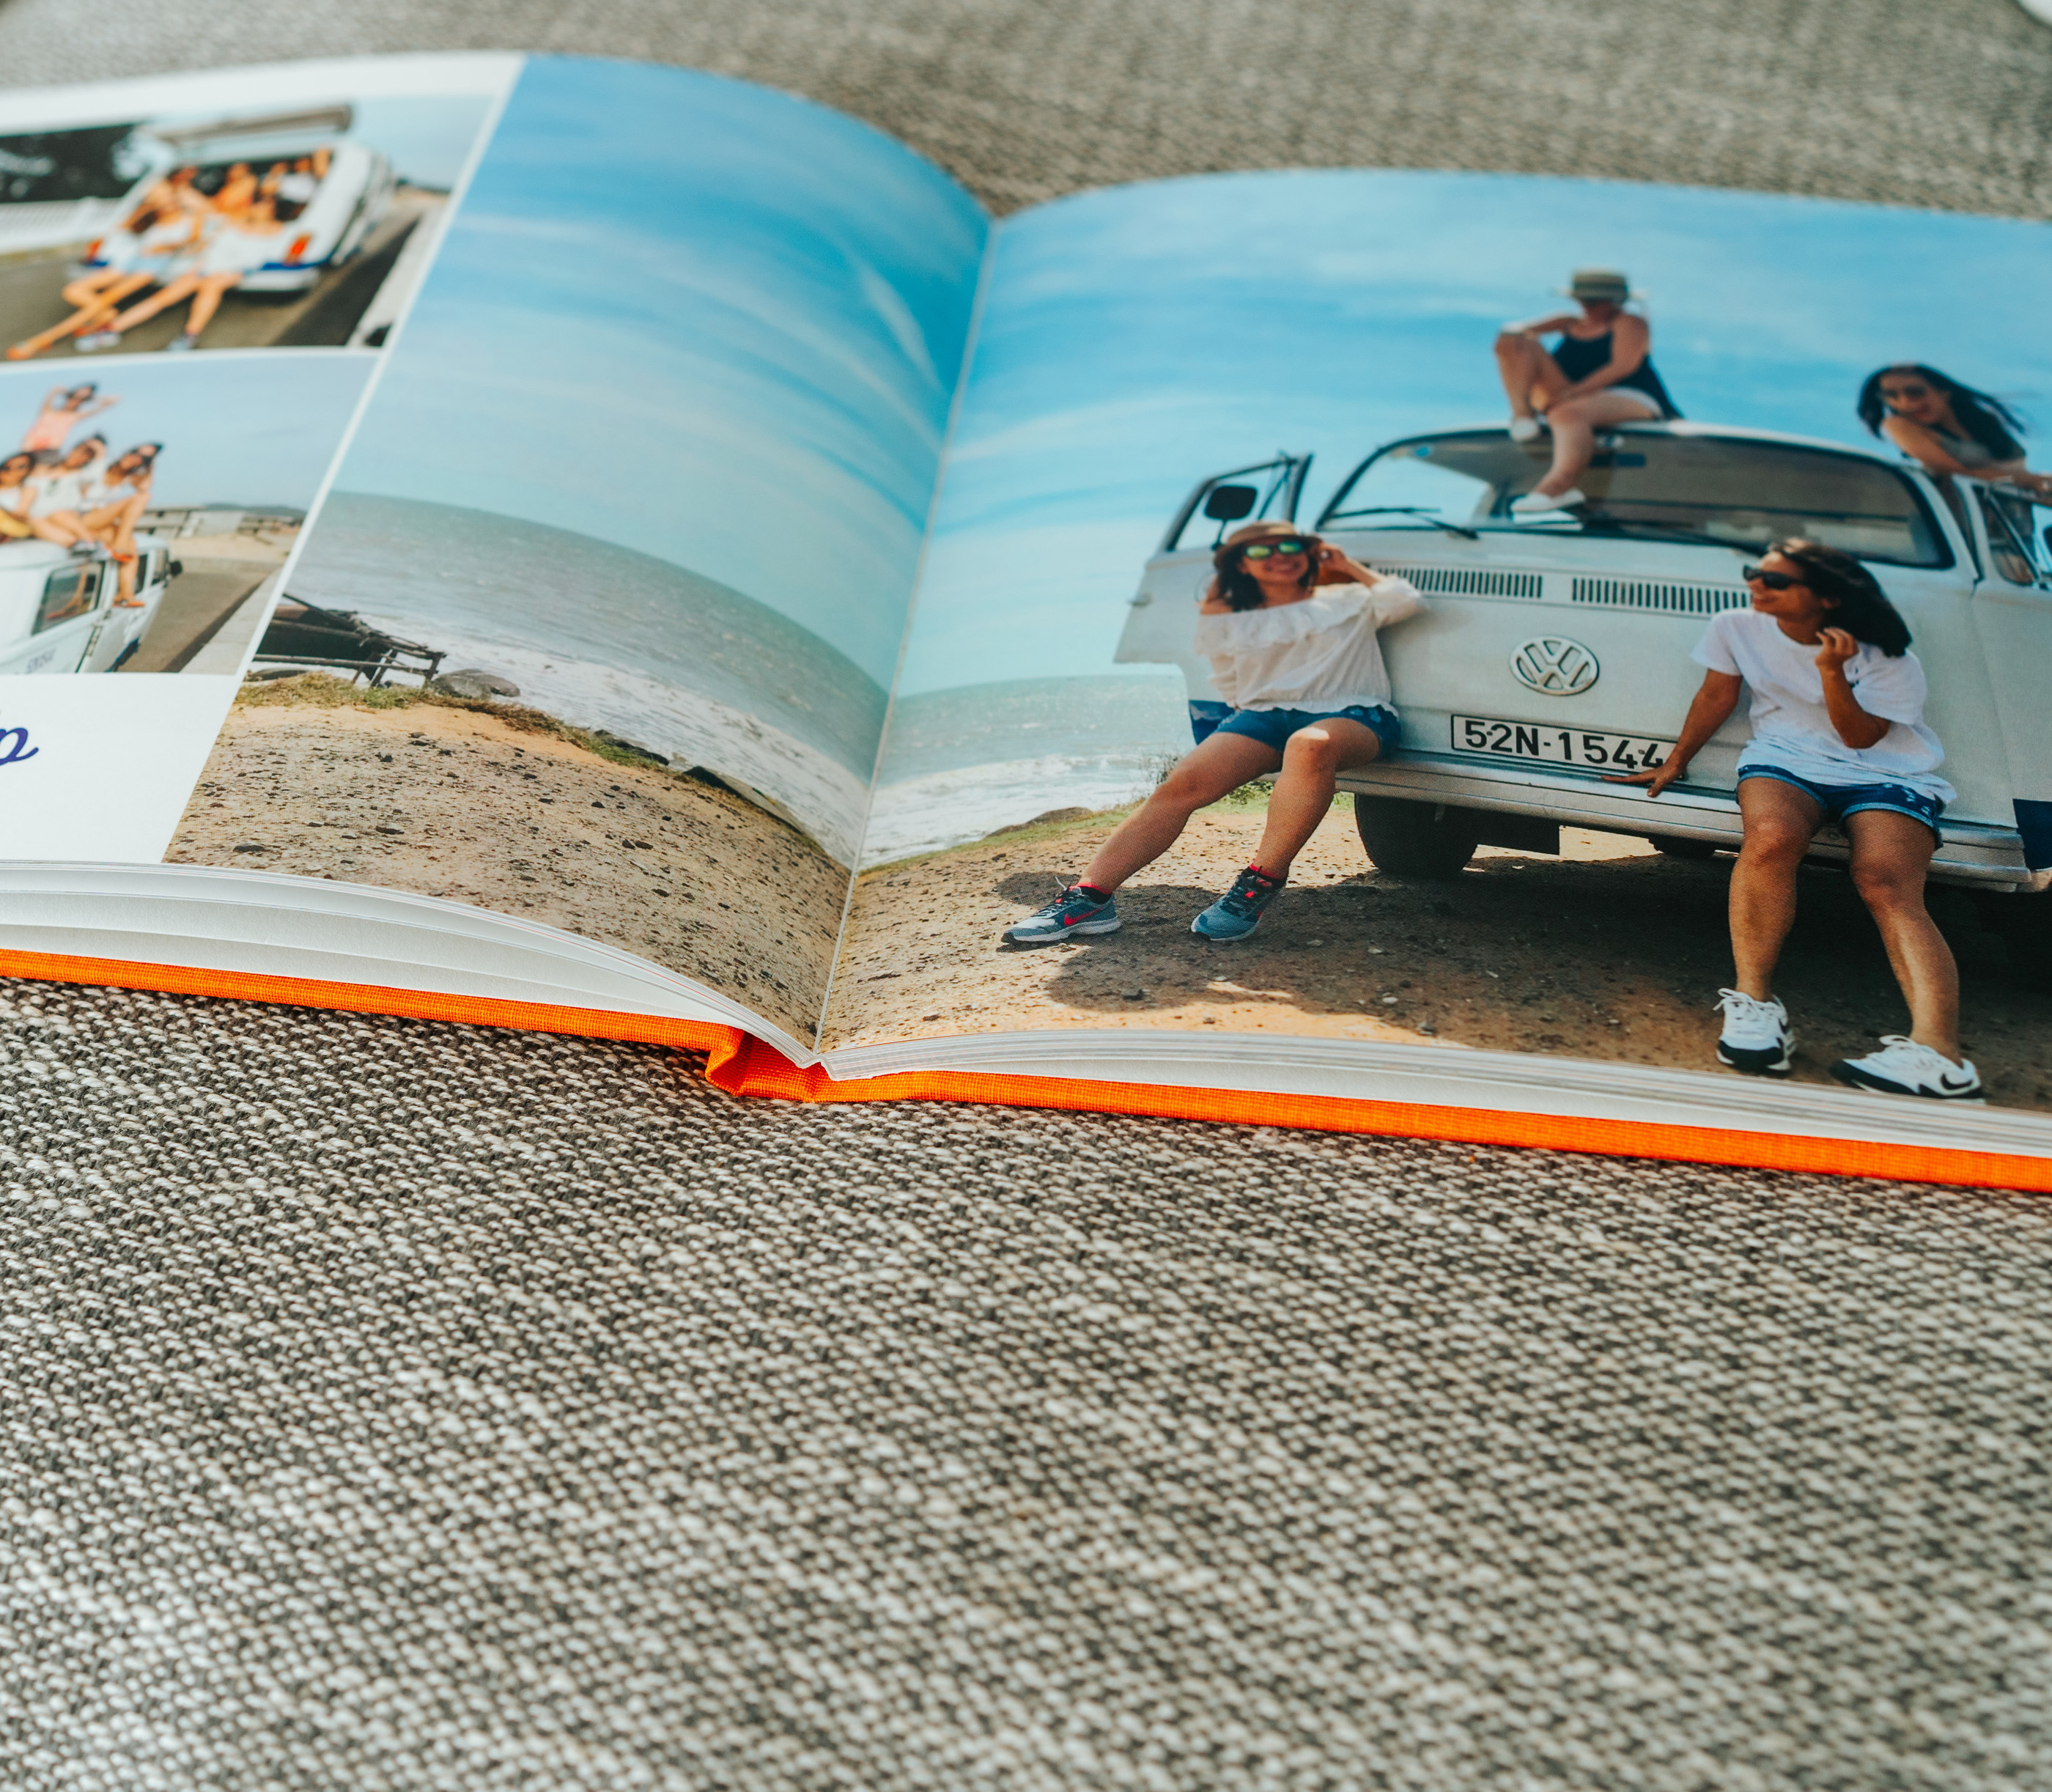 Travel Photo Books & Vacation Photo Albums